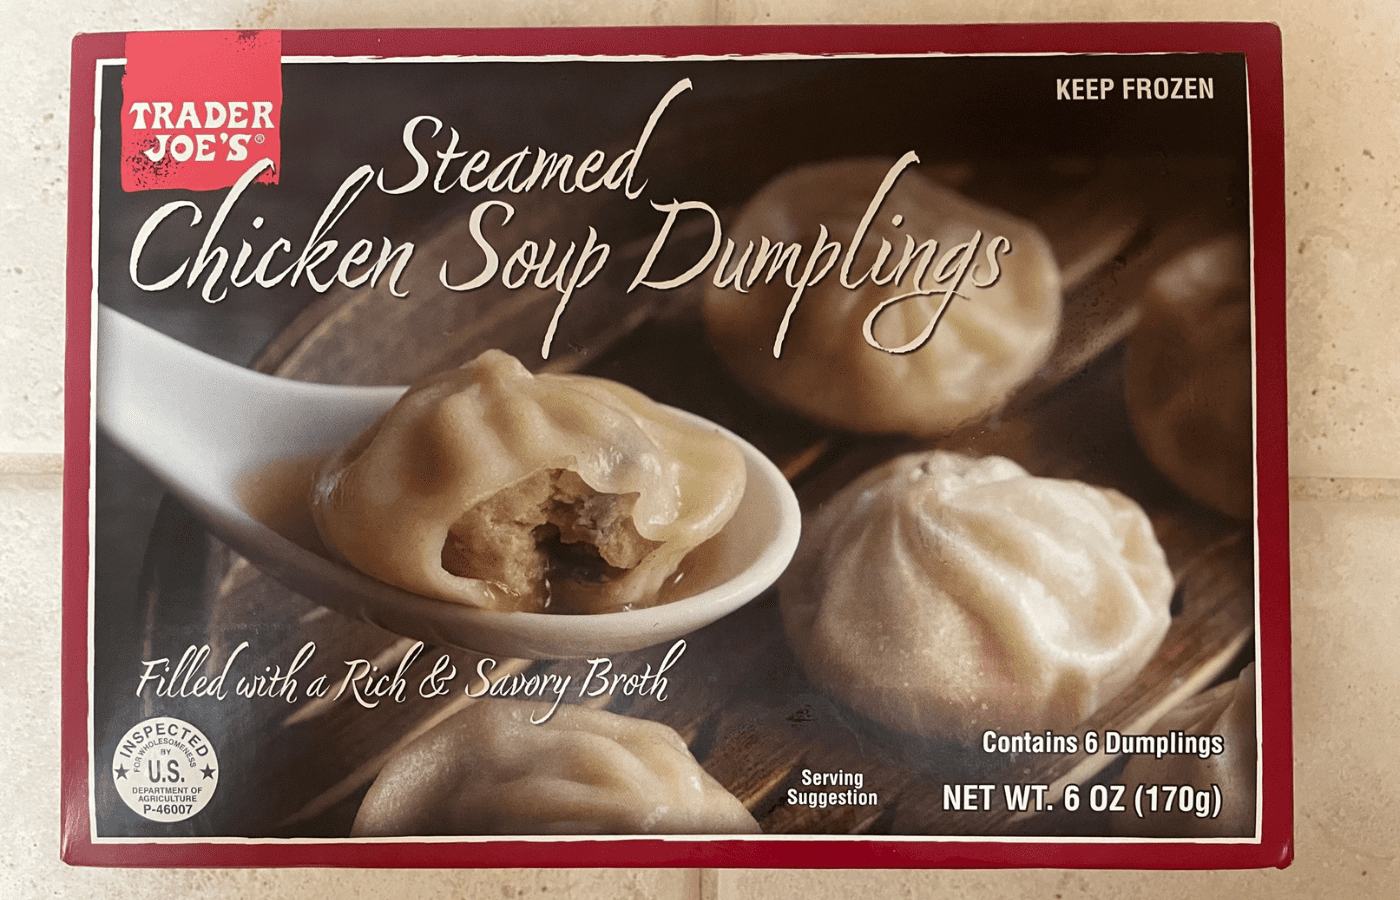 Trader Joe's Steamed Chicken Soup Dumplings – We'll Get The Food